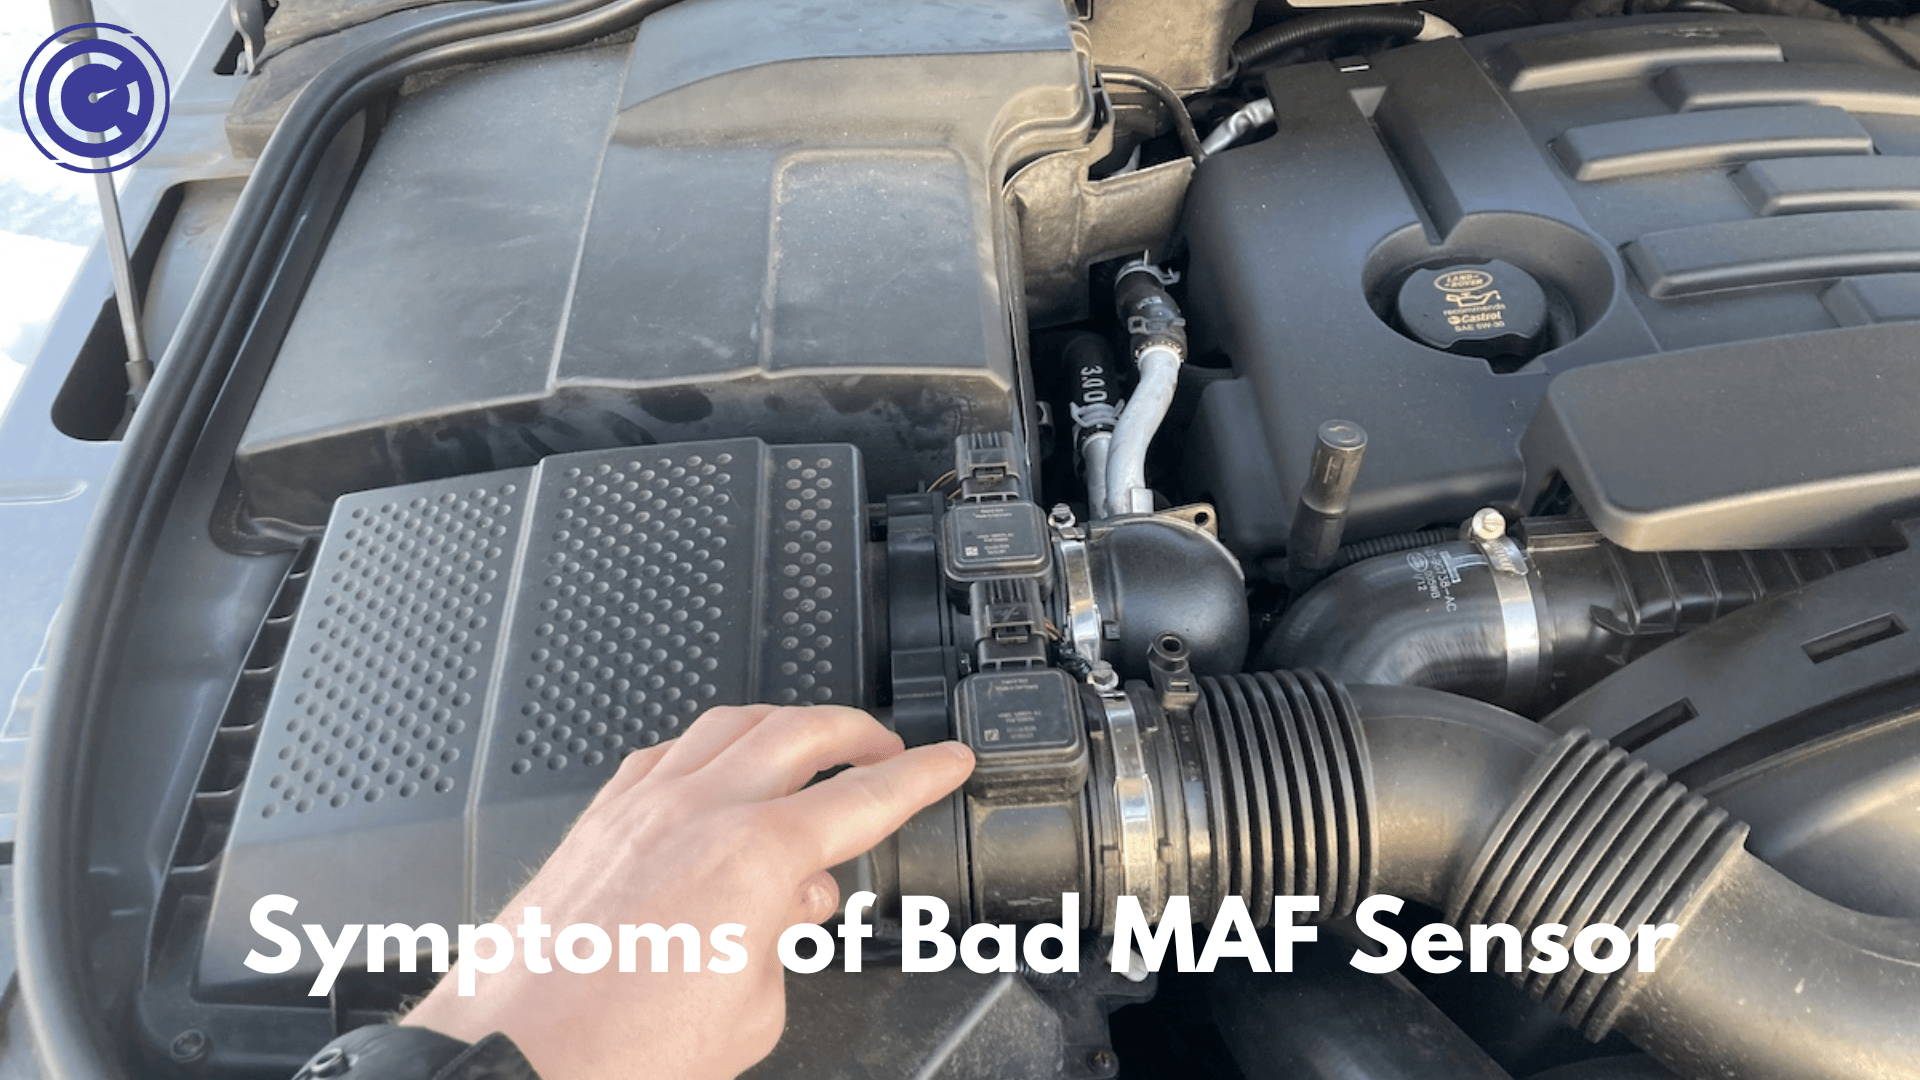 Symptoms of a Bad MAF Sensor